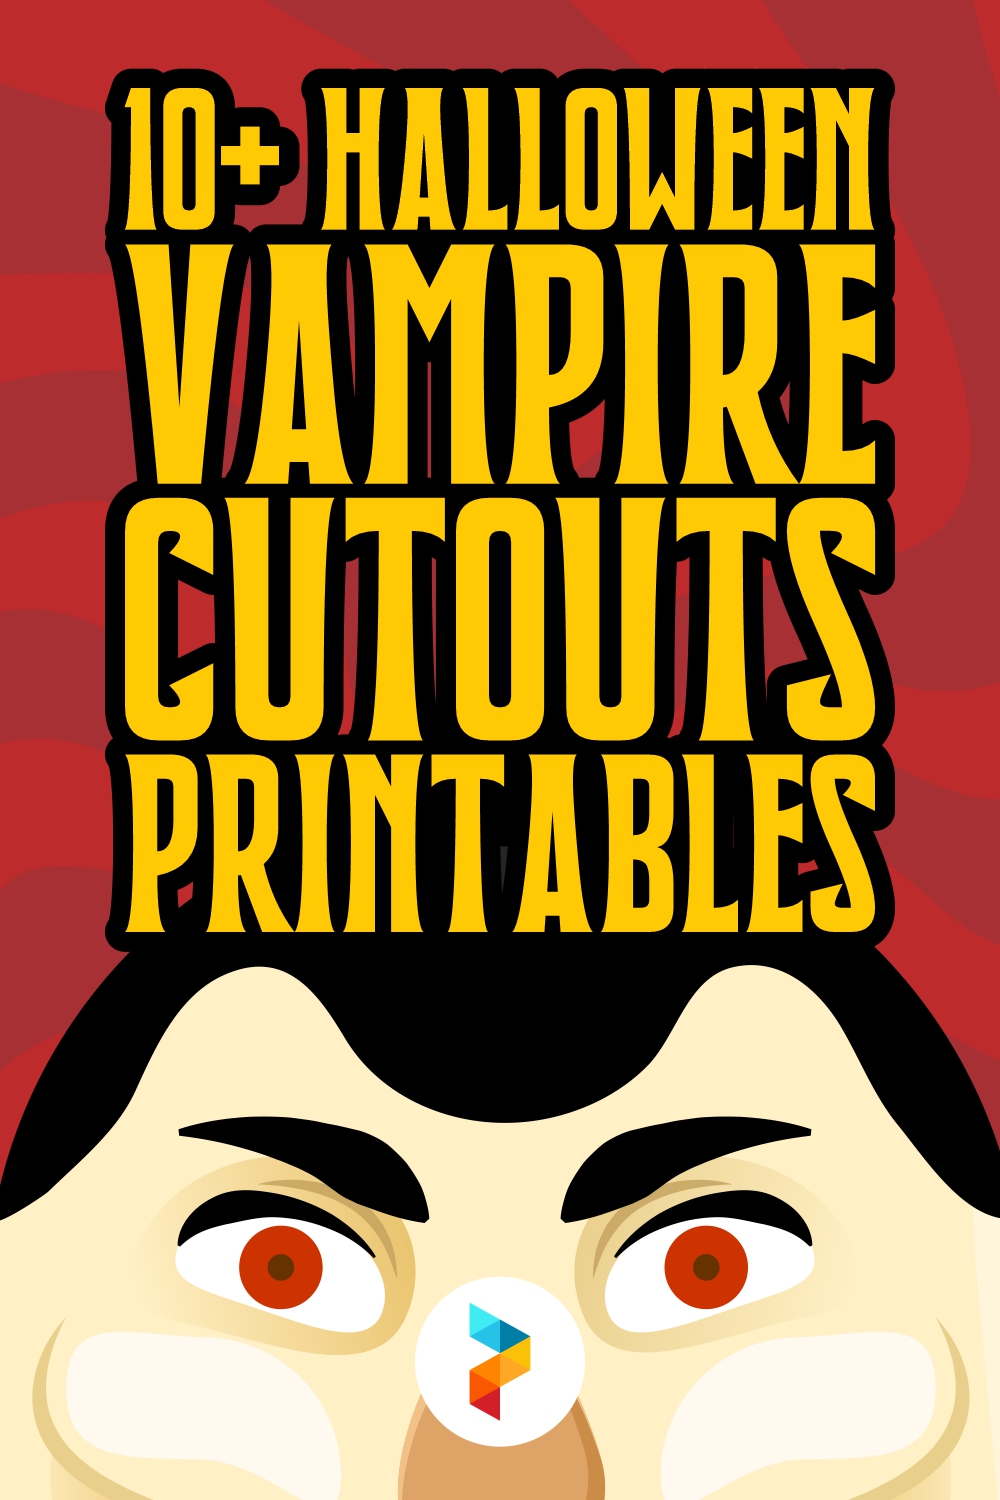 Halloween Vampire Cutouts Printables